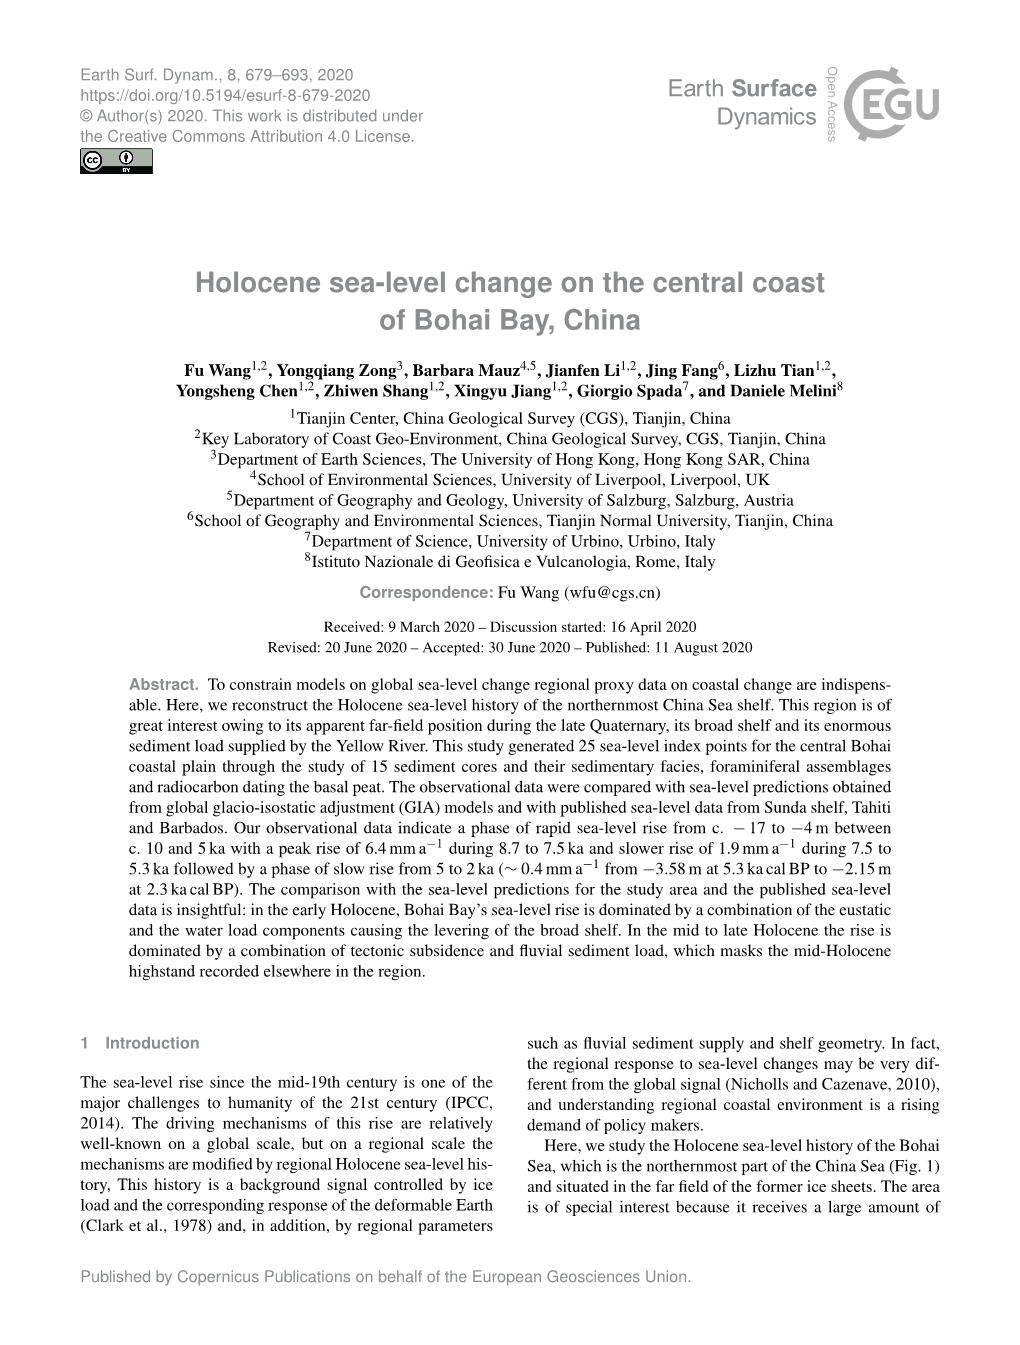 Holocene Sea-Level Change on the Central Coast of Bohai Bay, China